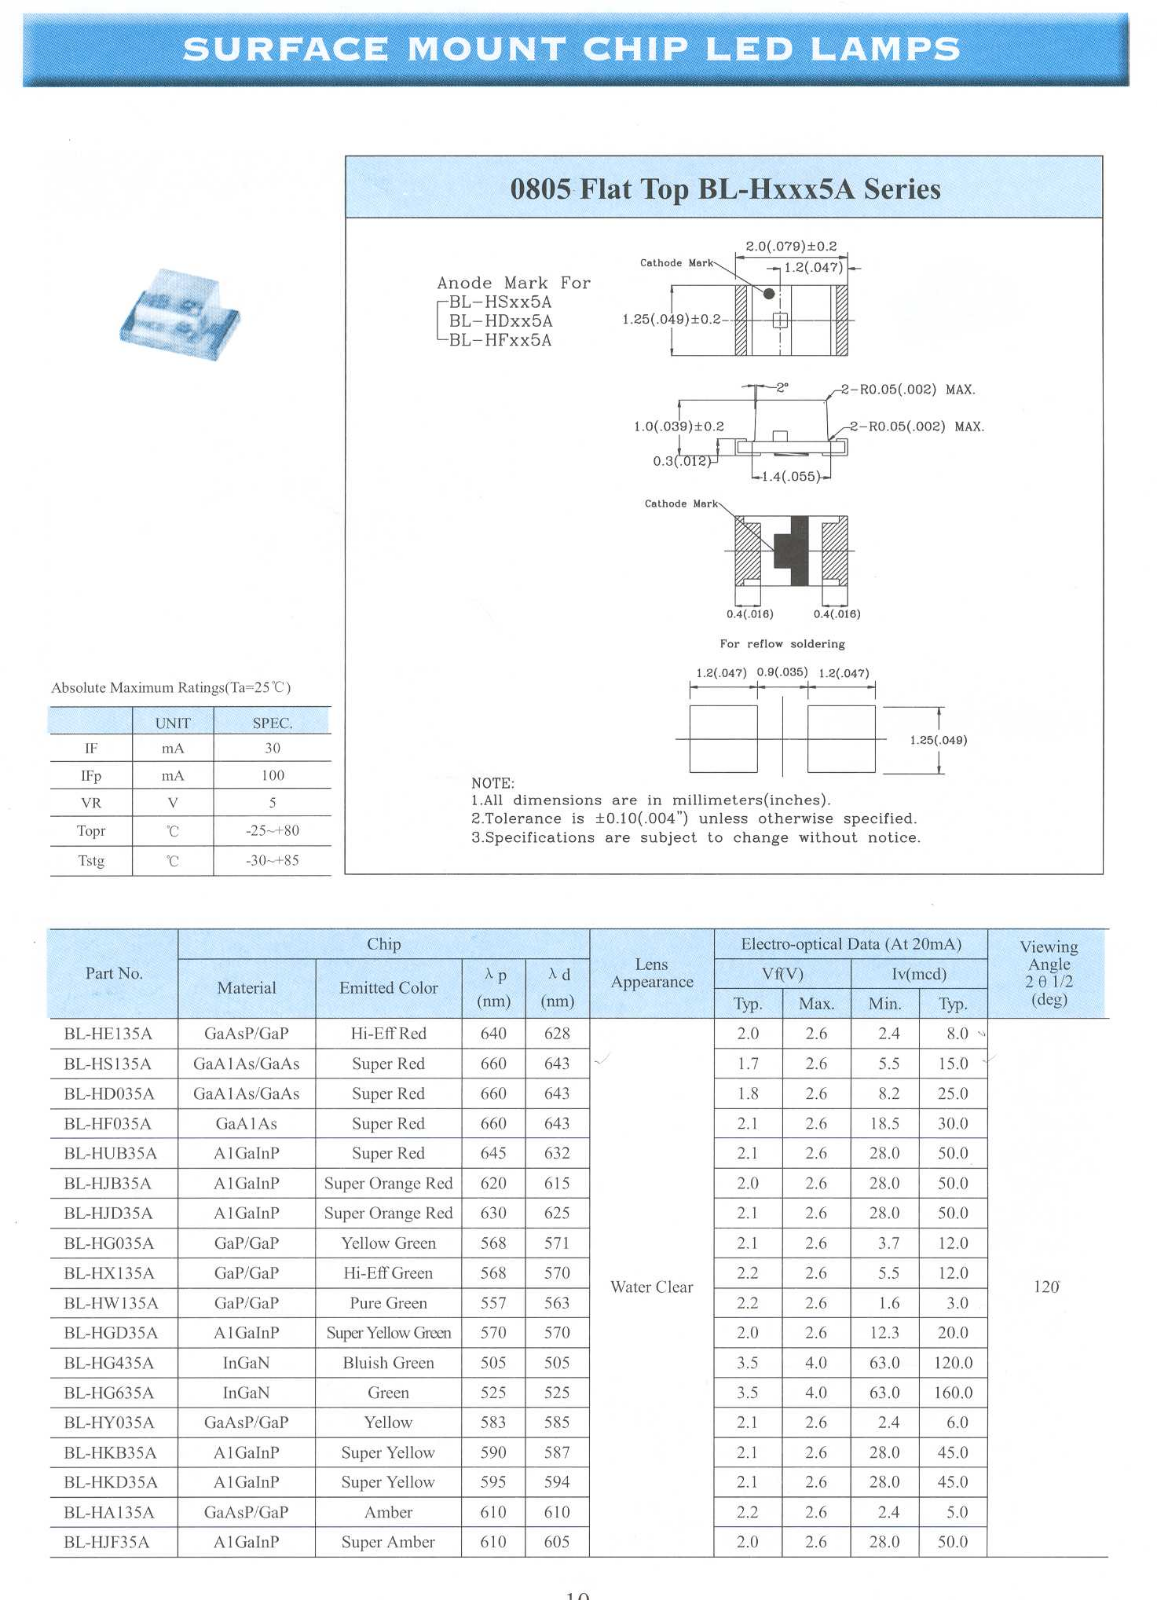 YELLOW STONE CORP BL-HY035A, BL-HX135A, BL-HUB35A, BL-HS135A, BL-HKB35A Datasheet